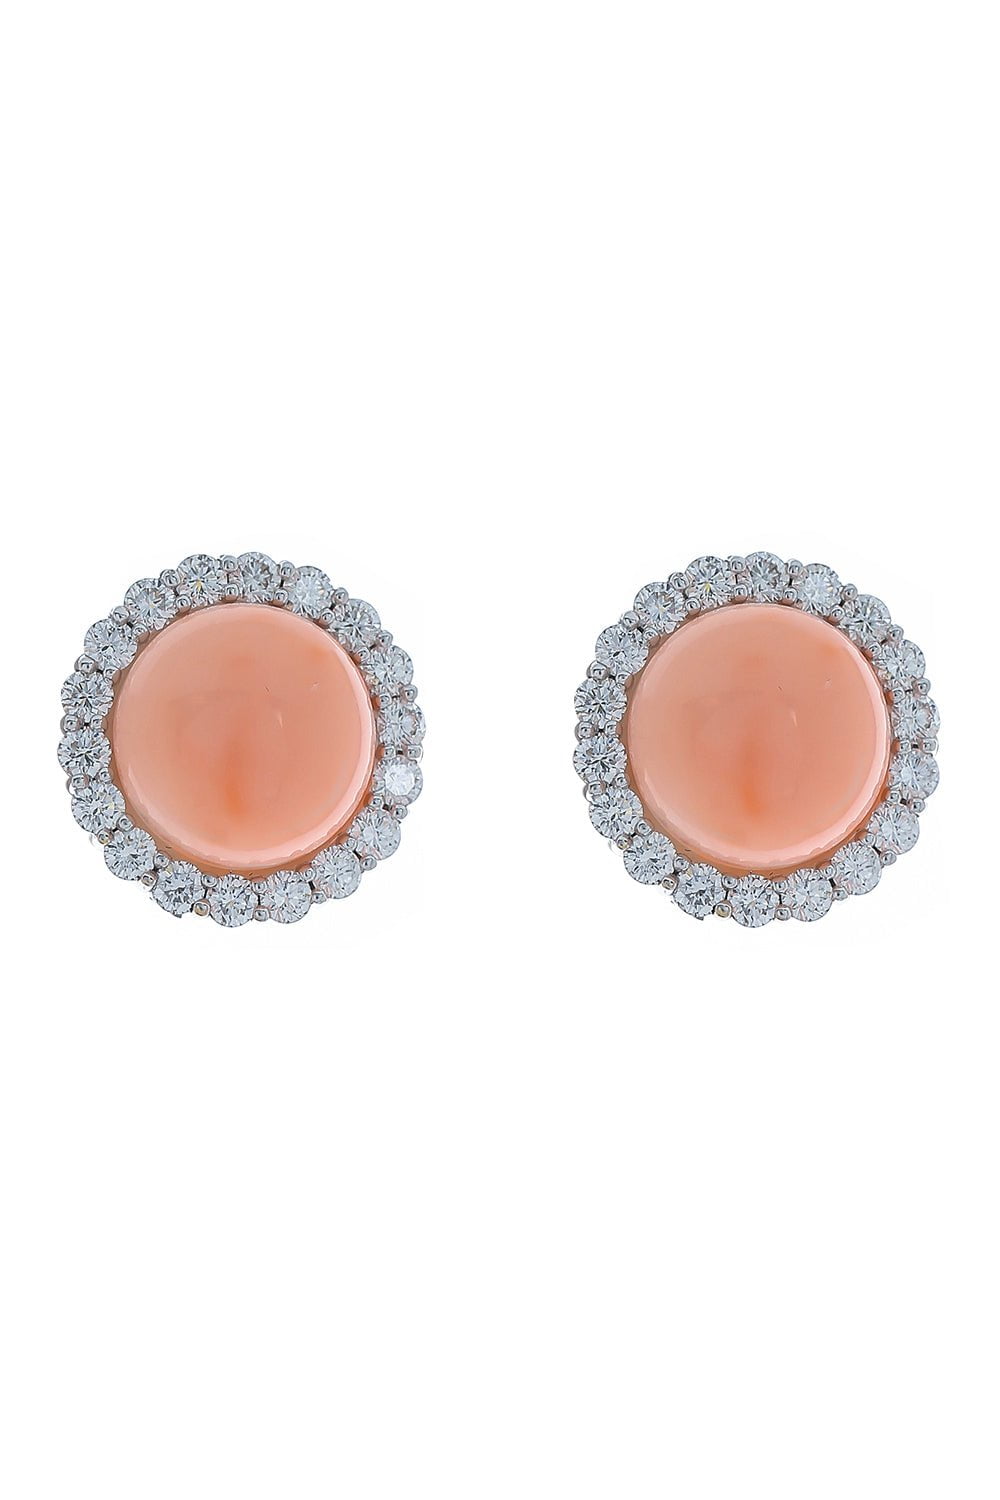 ASSAEL-Angel Skin Coral Diamond Earrings-WHITE GOLD